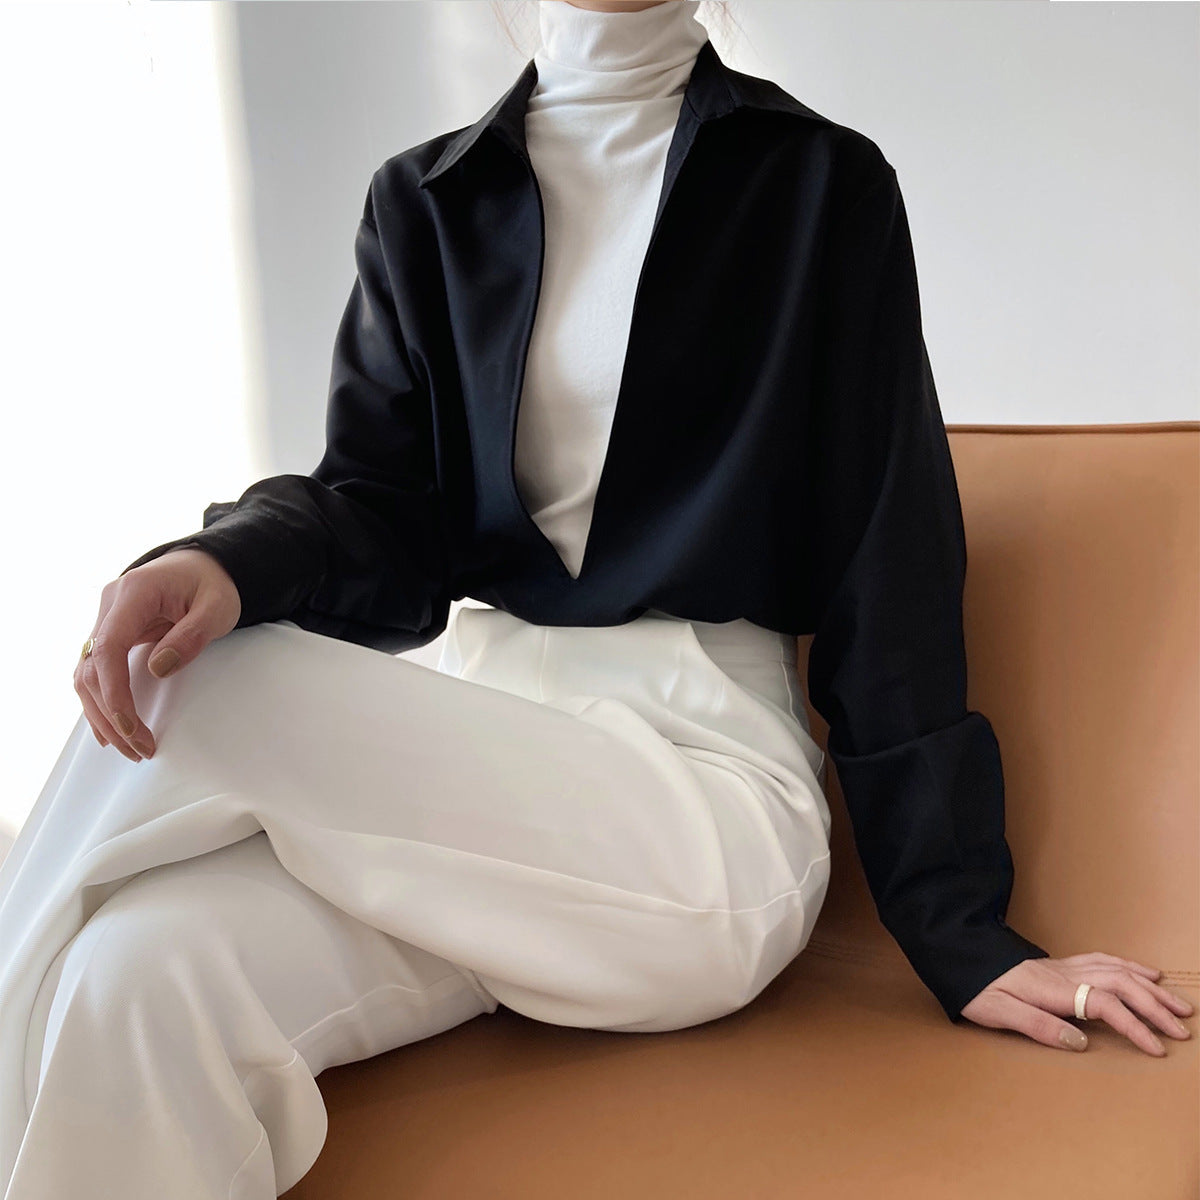 Designed Women Long Sleeves Shirts-Shirts & Tops-Black-S-Free Shipping Leatheretro